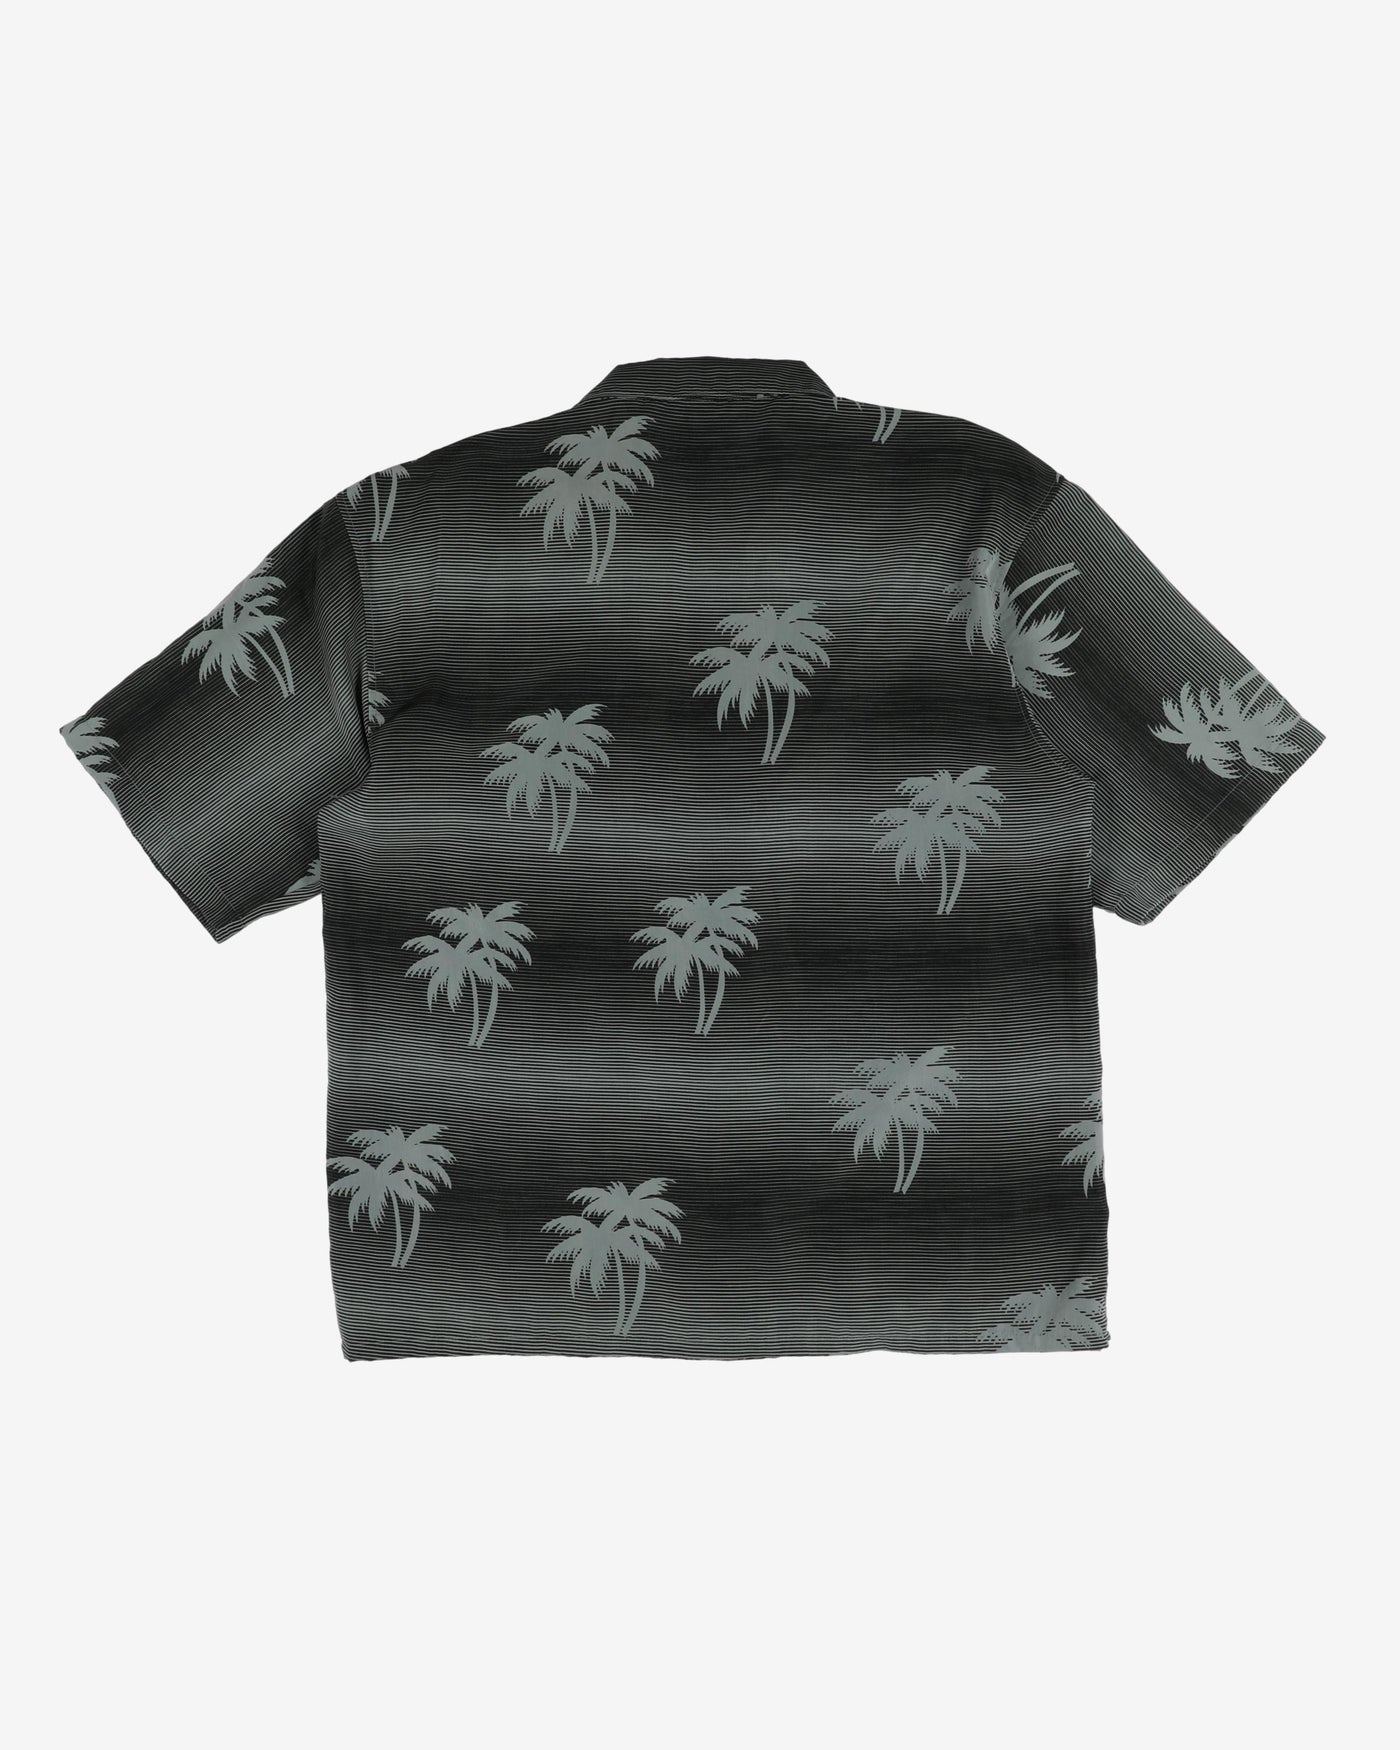 Vintage Maui Maui Green Patterned Hawaiian Shirt - XL